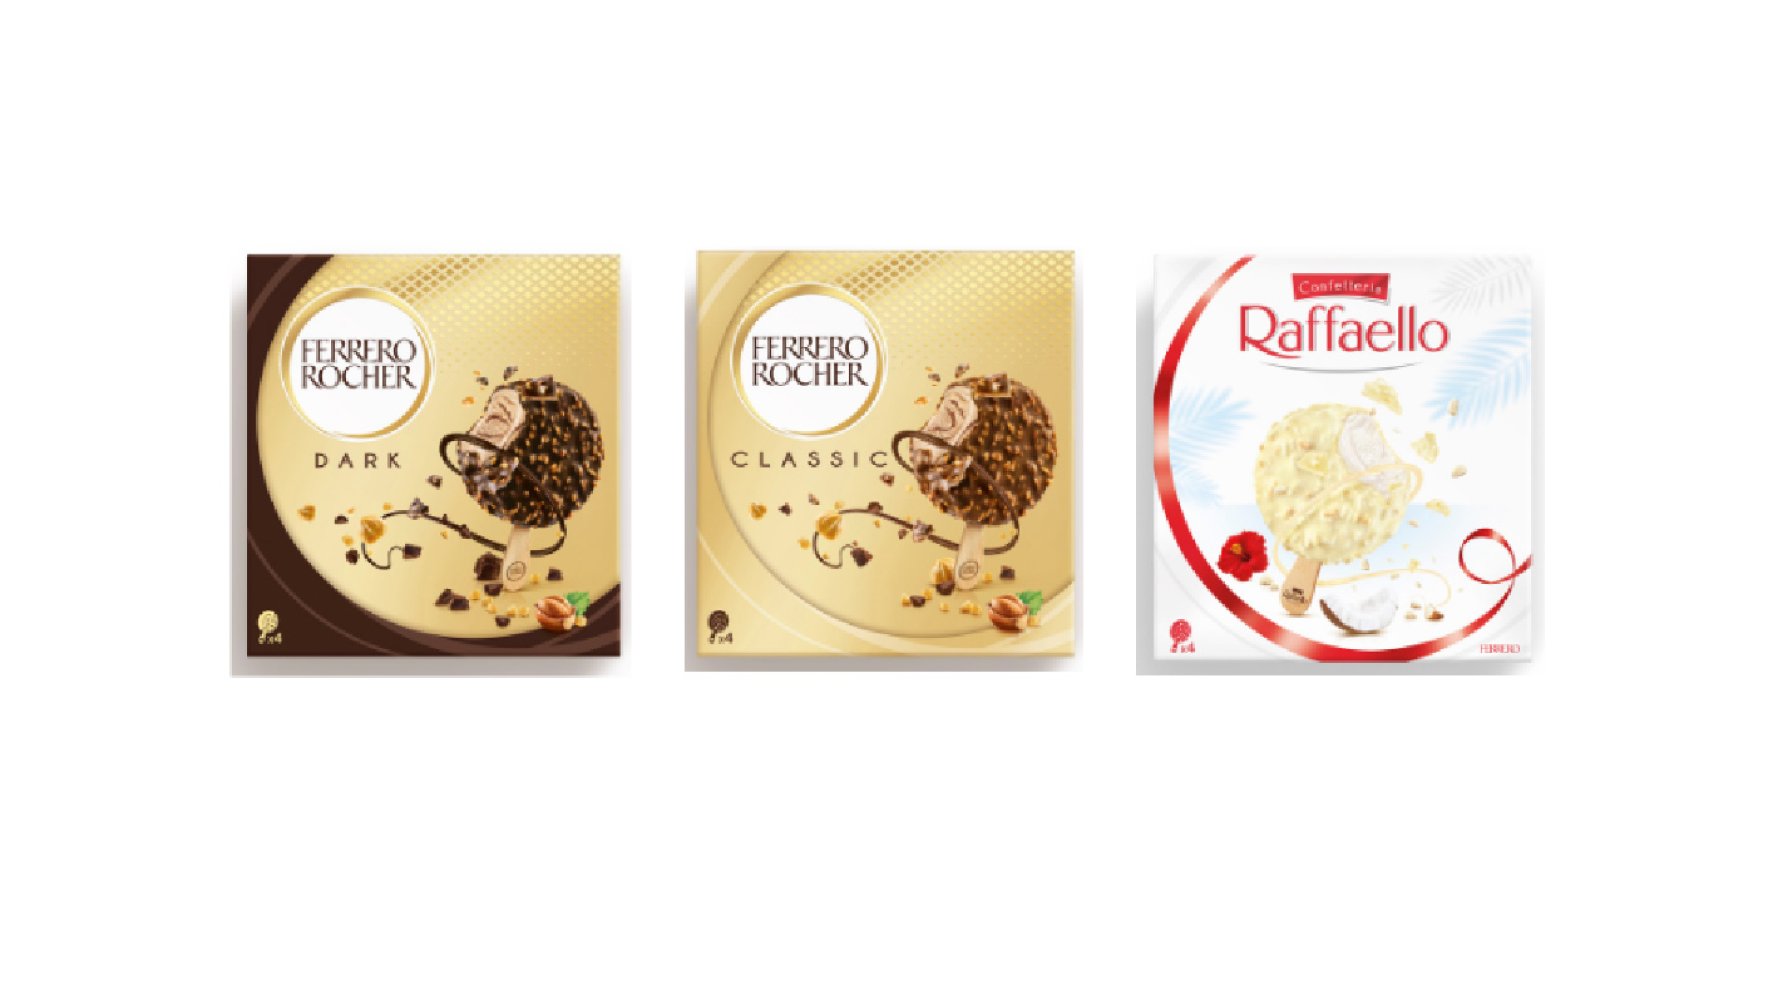 Ferrero unveils debut for Rocher and Raffaello ice cream ranges